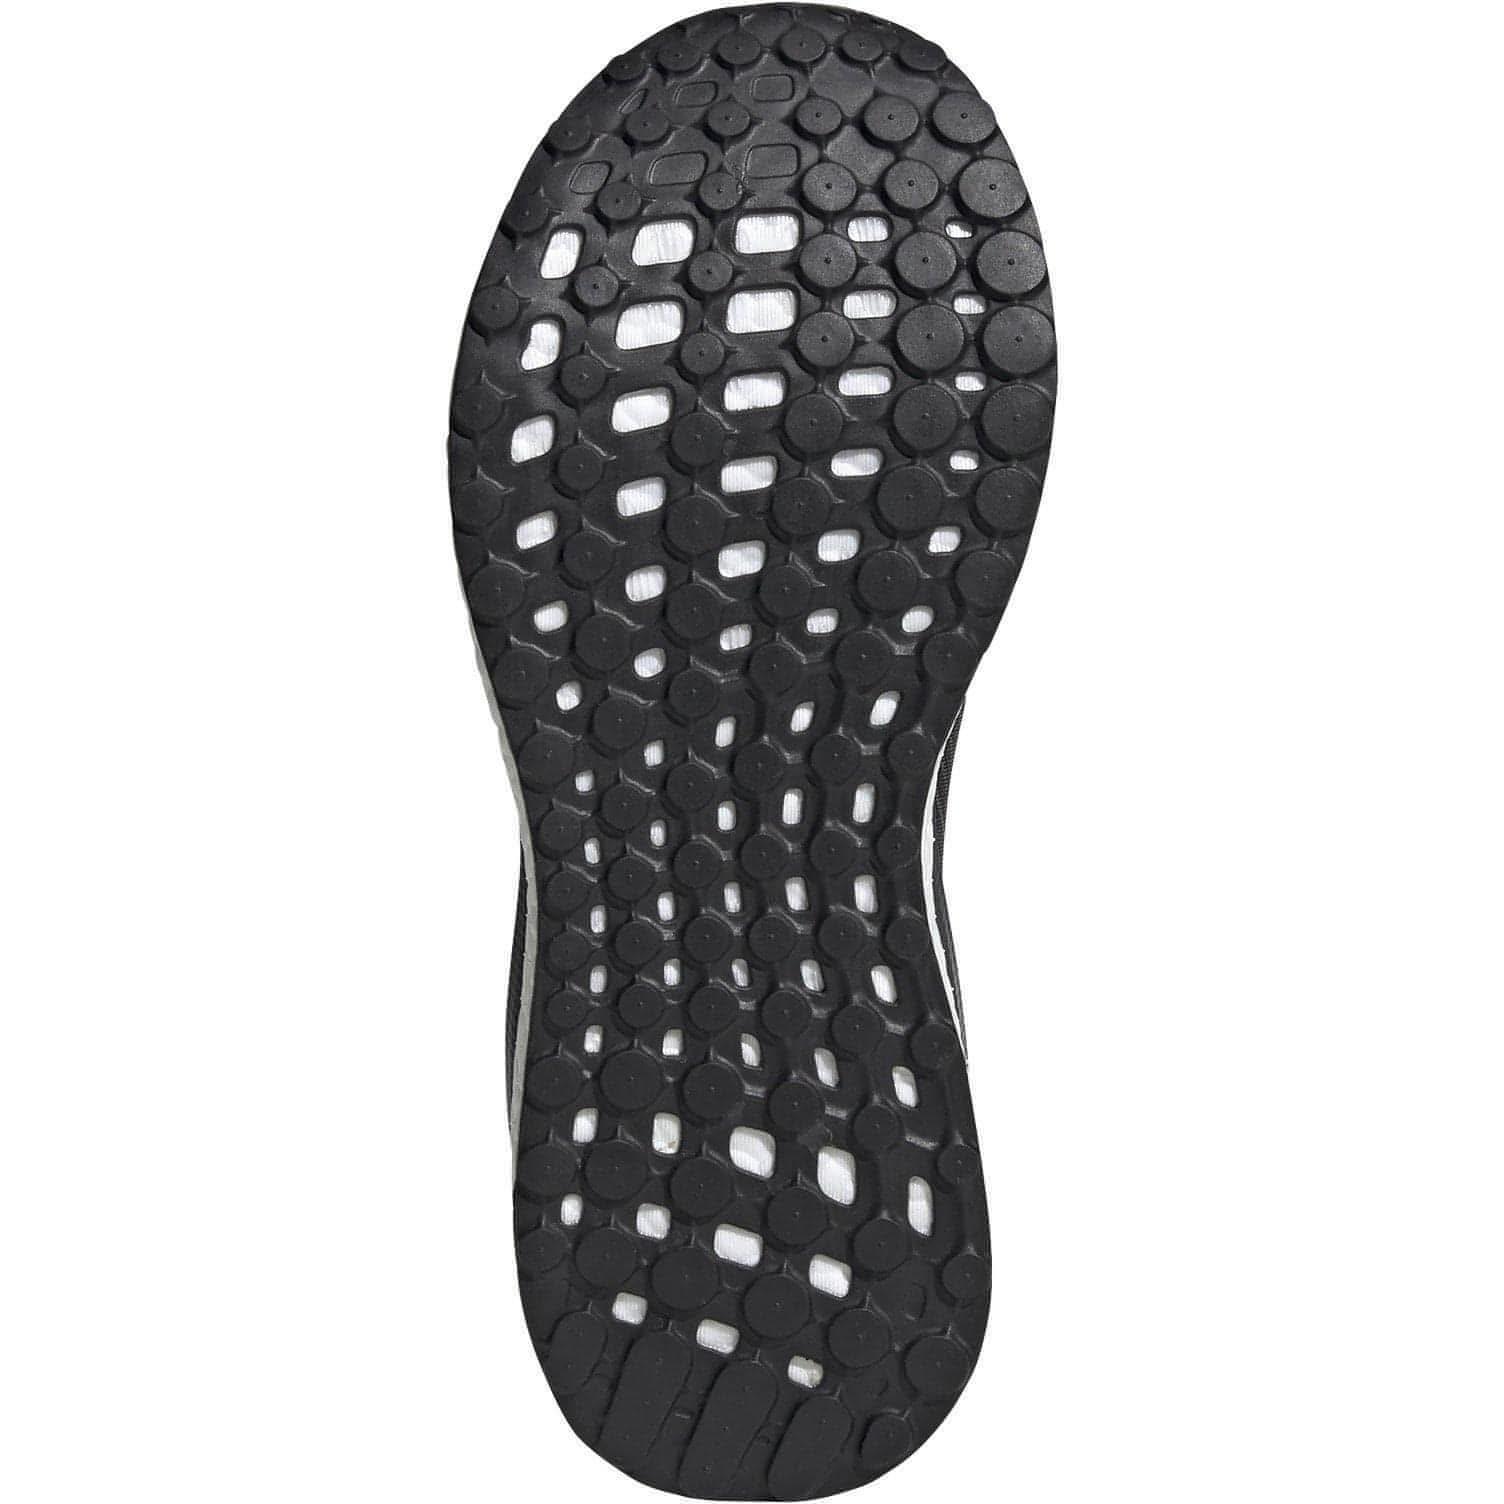 adidas Solar Drive 19 Boost Womens Running Shoes - Black - Start Fitness